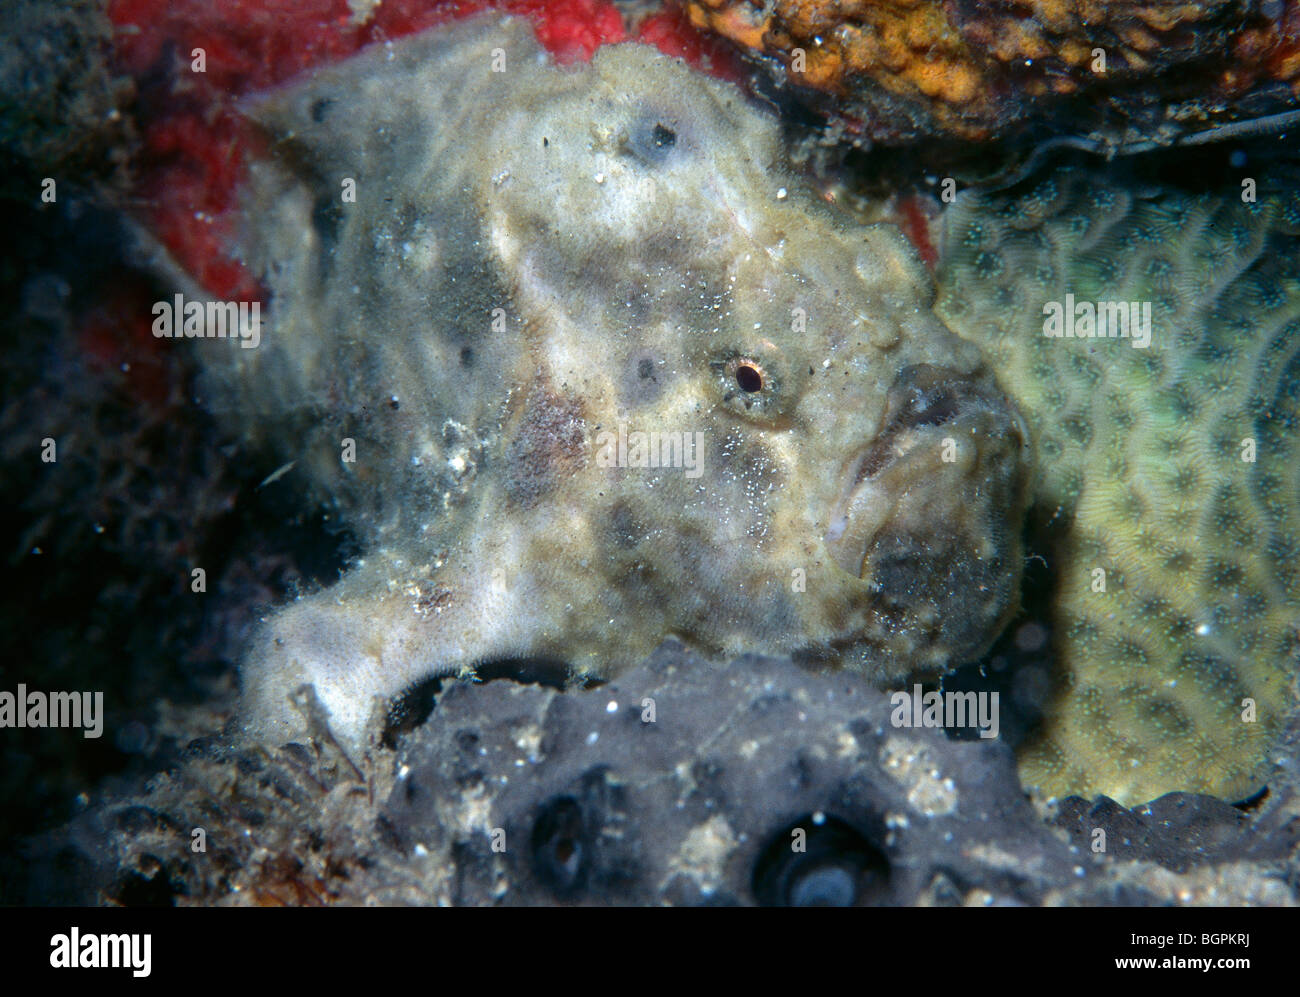 Longlure Frogfish (Antennarius multiocellatus Stock Photo - Alamy